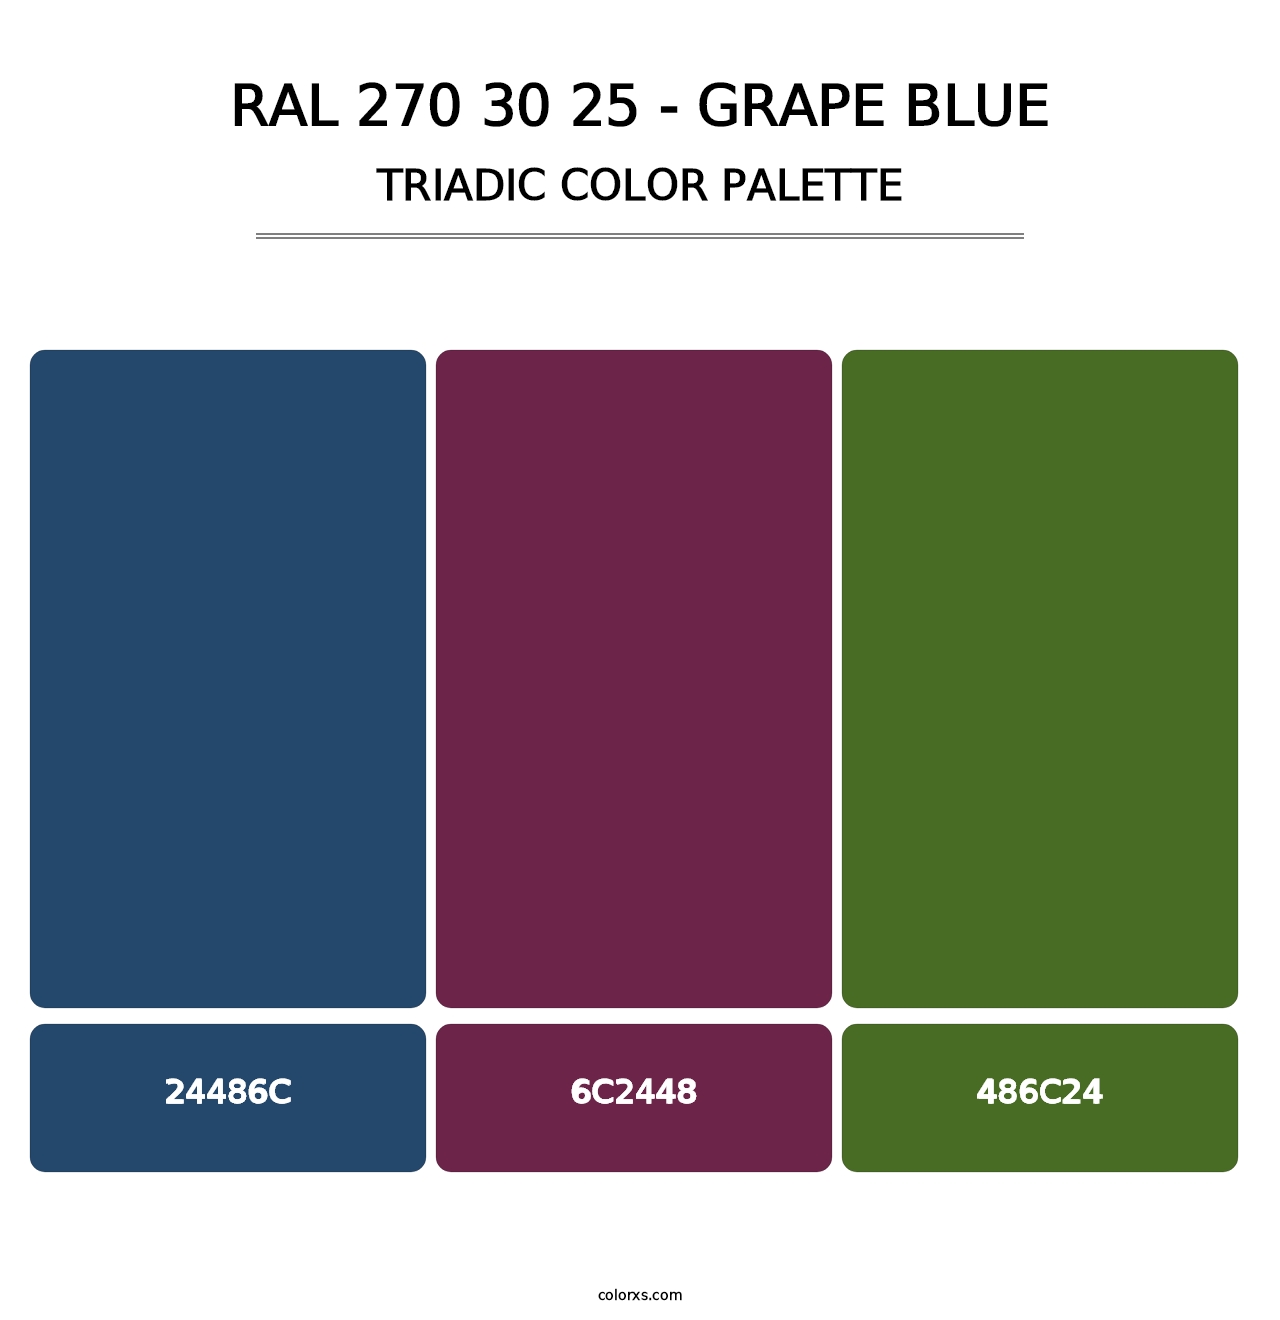 RAL 270 30 25 - Grape Blue - Triadic Color Palette